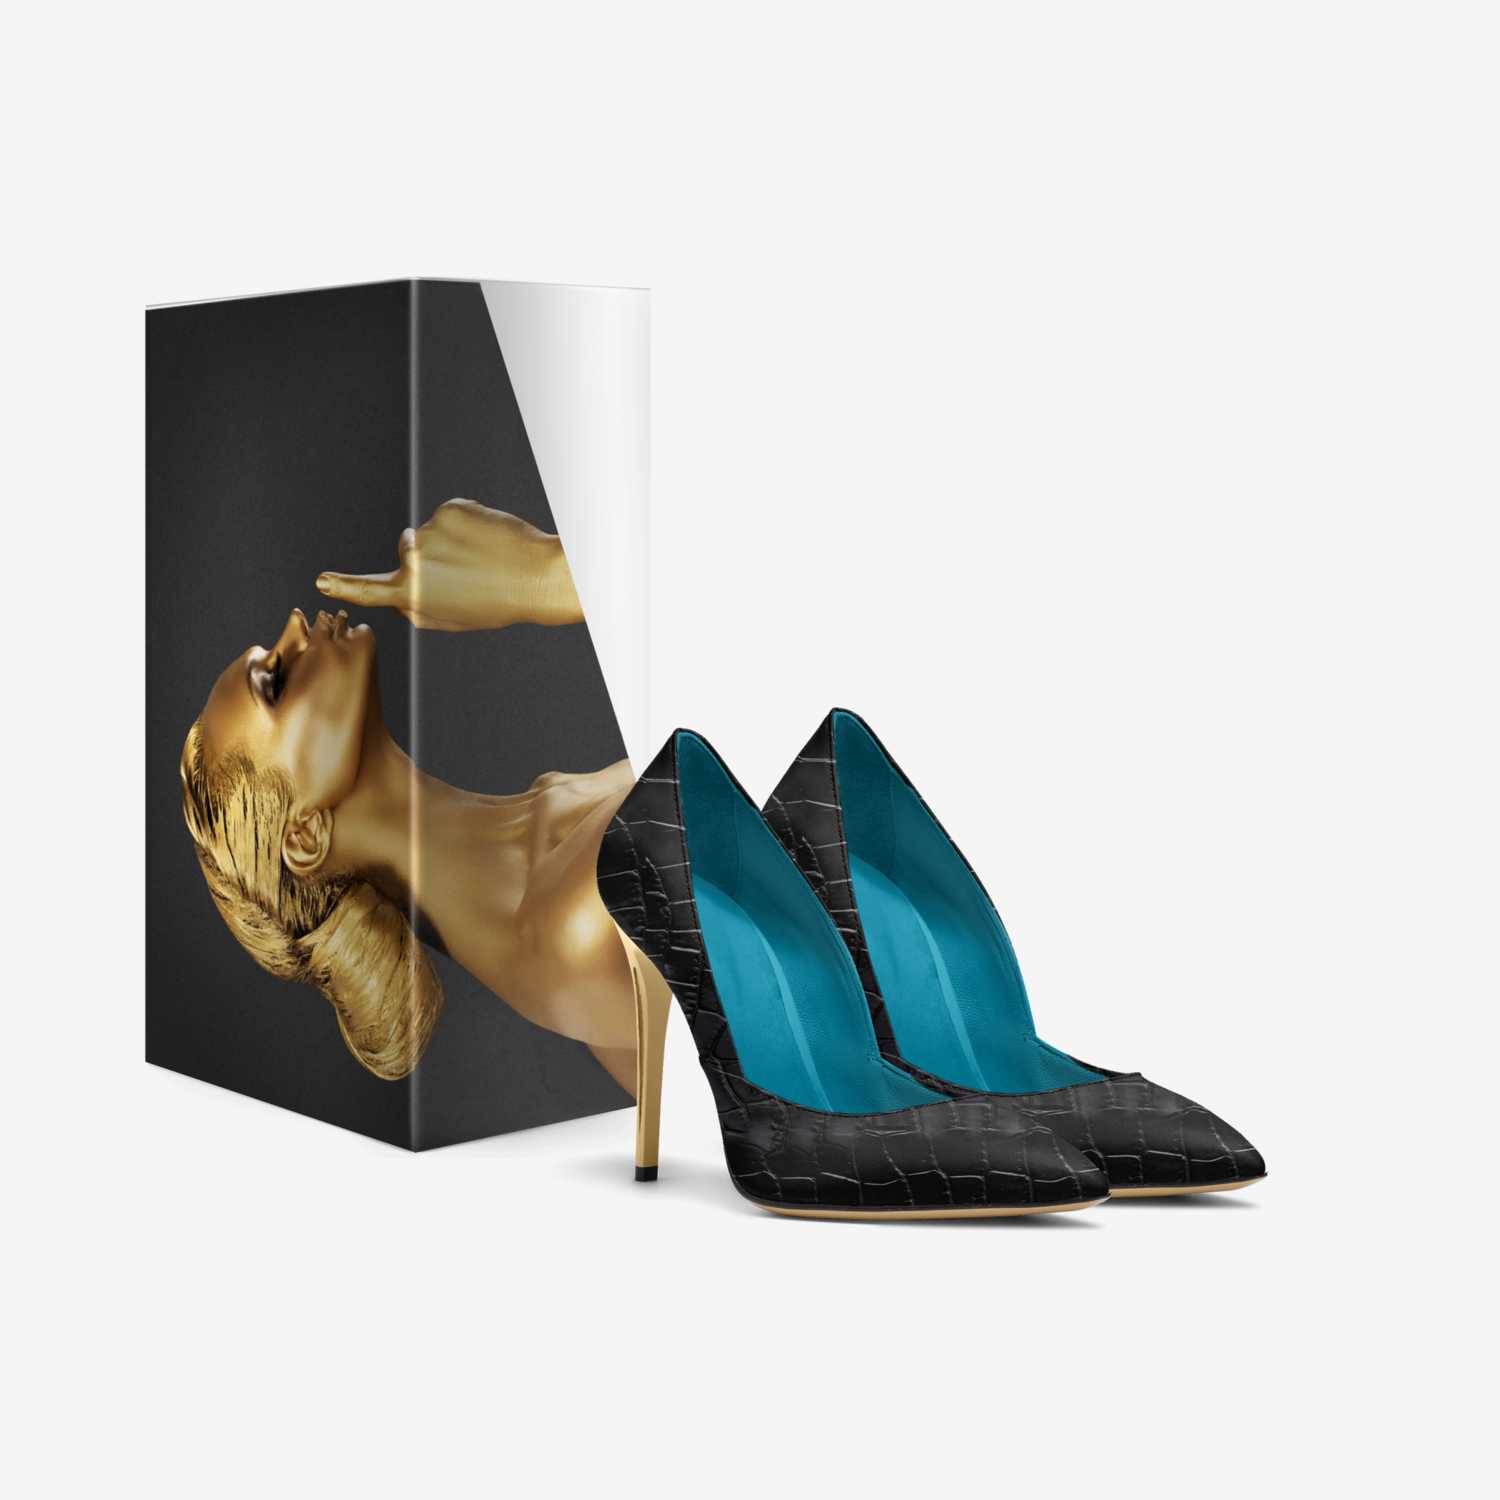 AUB Premium custom made in Italy shoes by Kam Lake | Box view